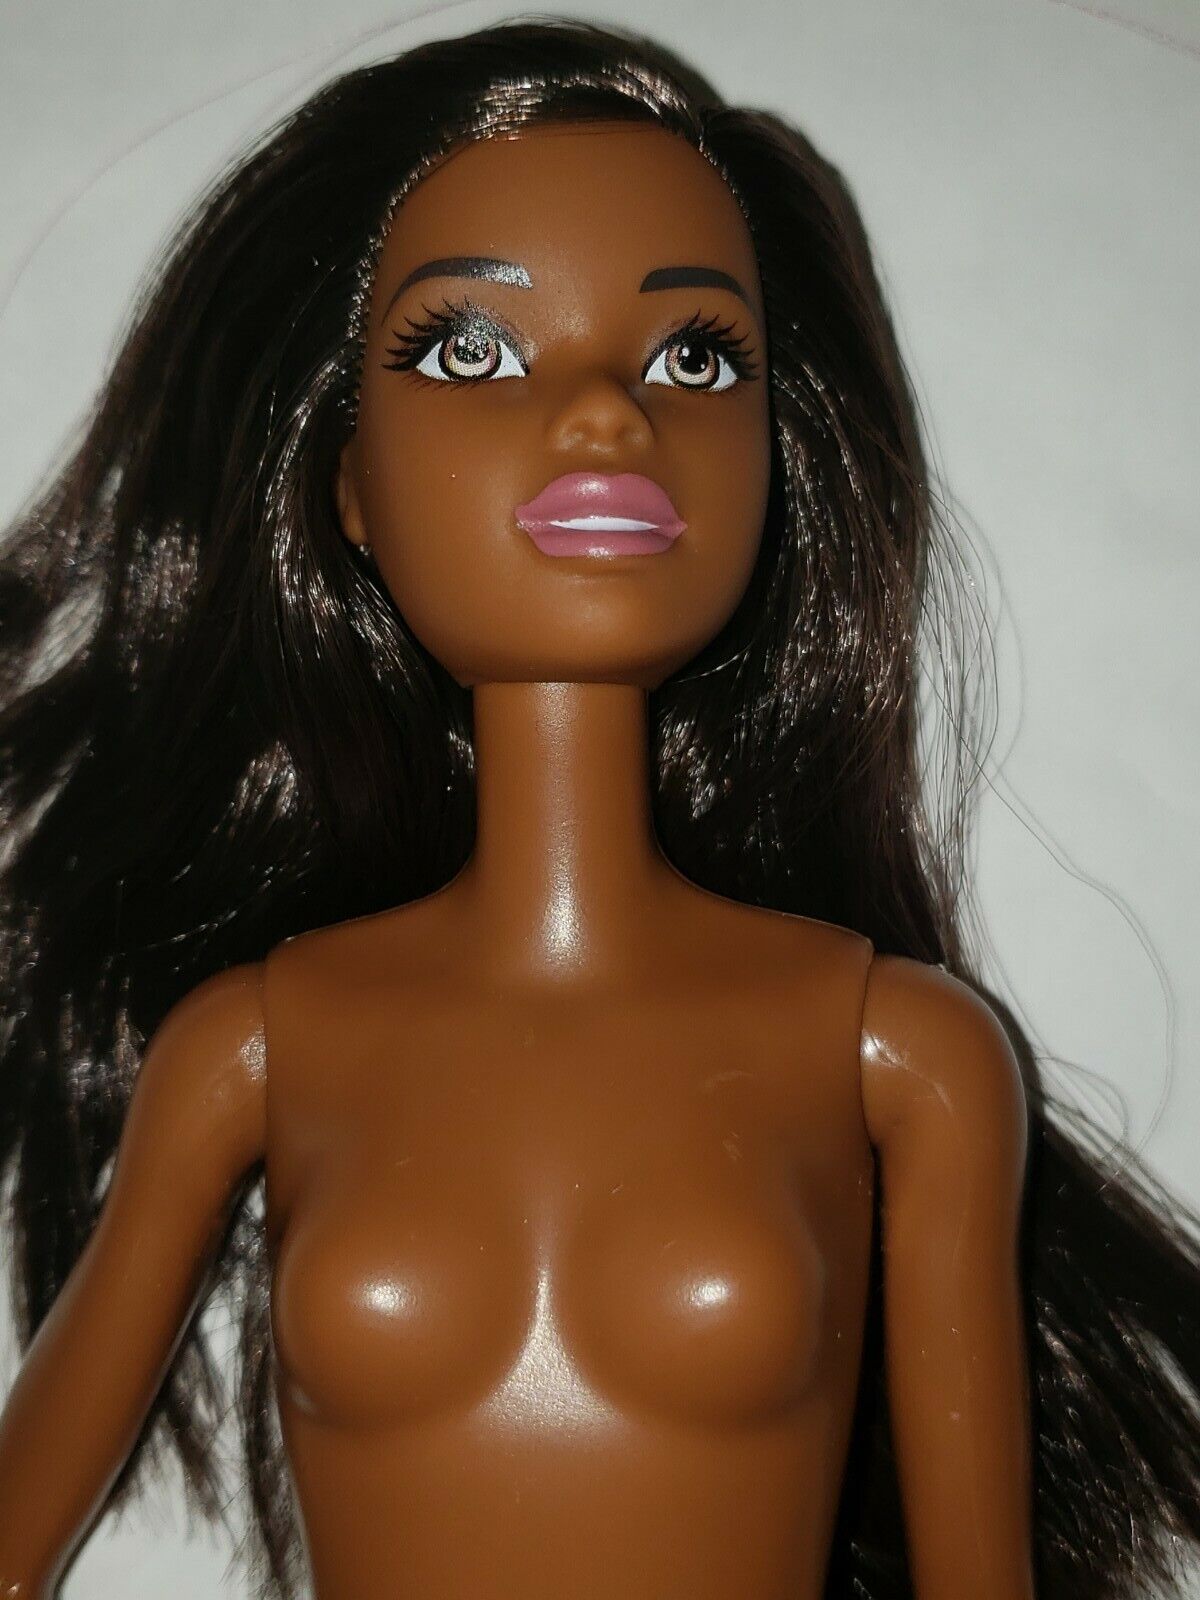 cherith lee share barbie doll naked photos